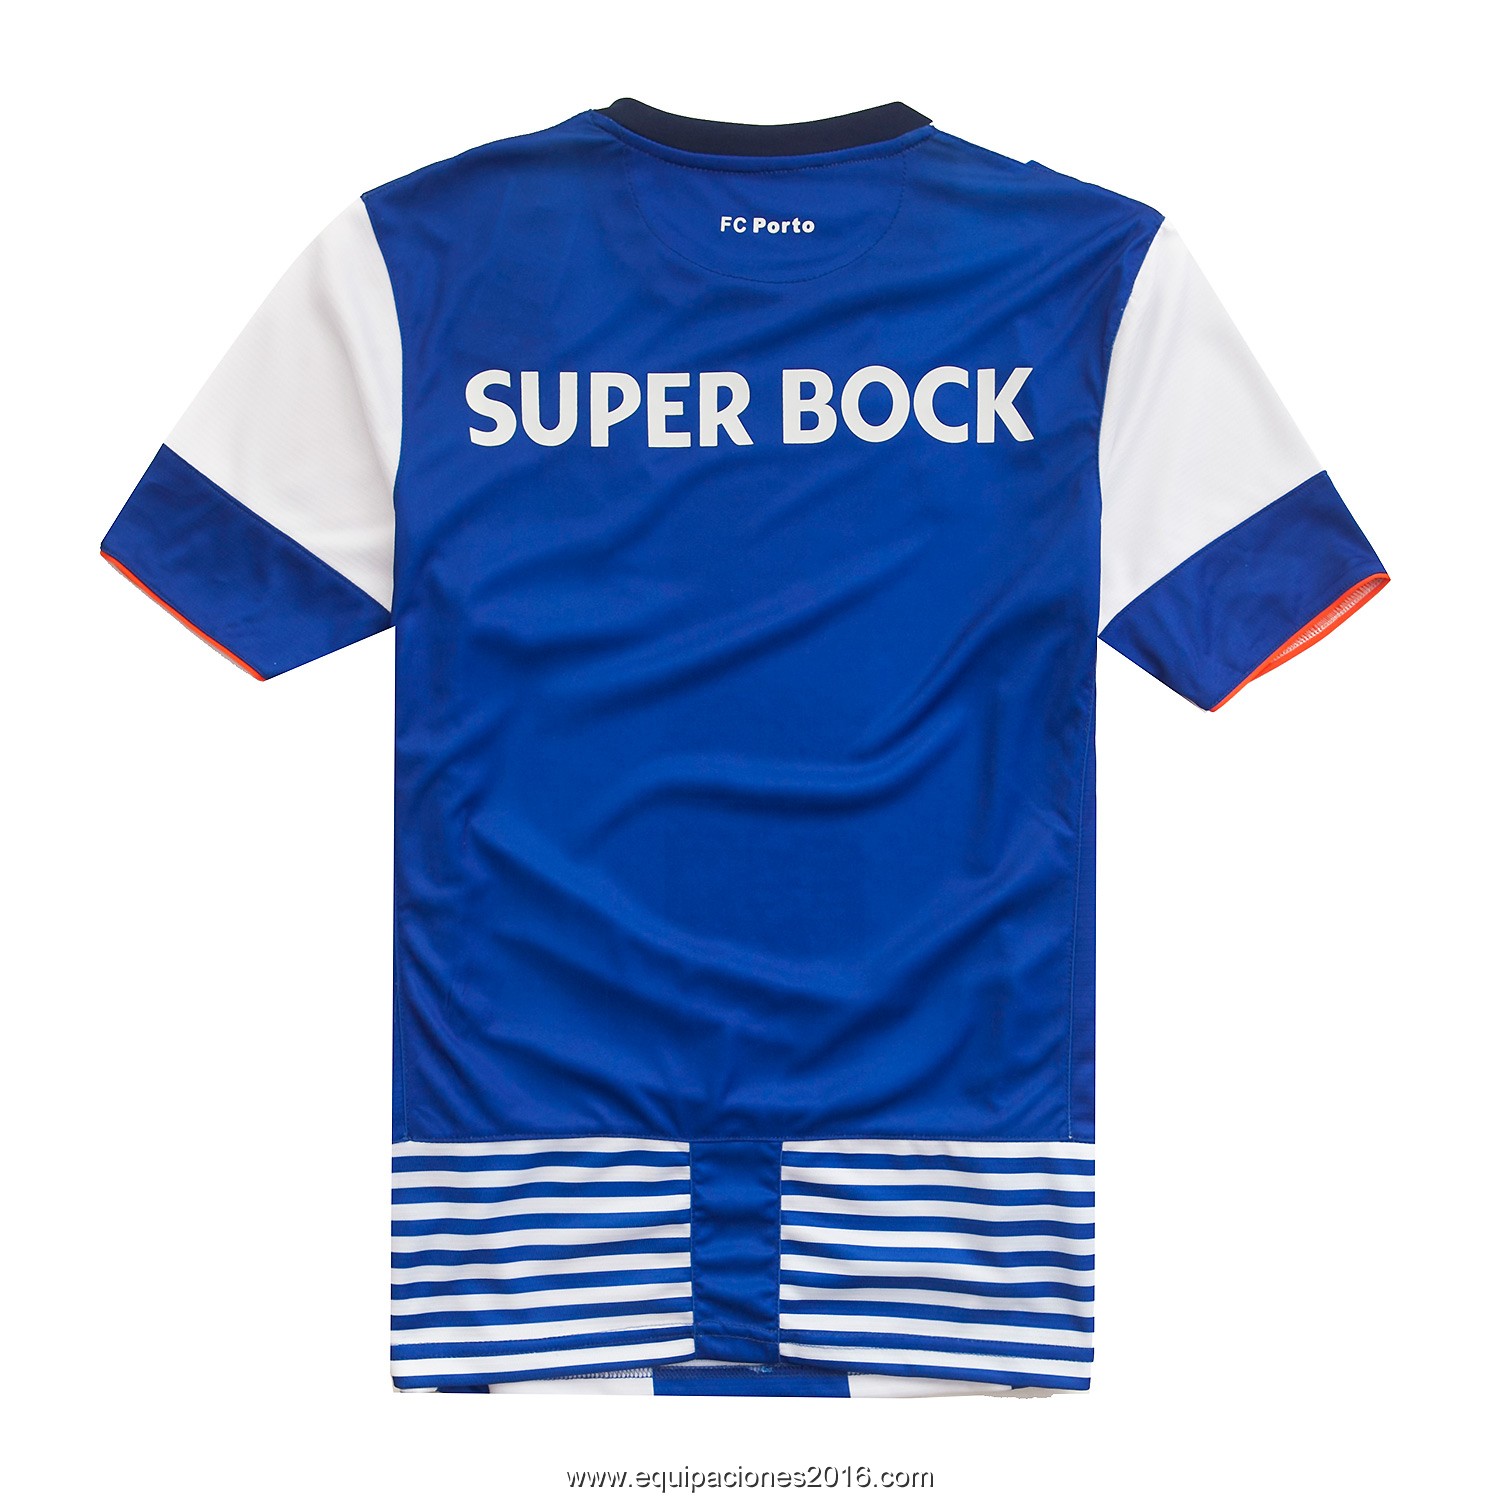 Camisetas de futbol baratas 2016: camisetas de futbol Porto 2016 €20.99